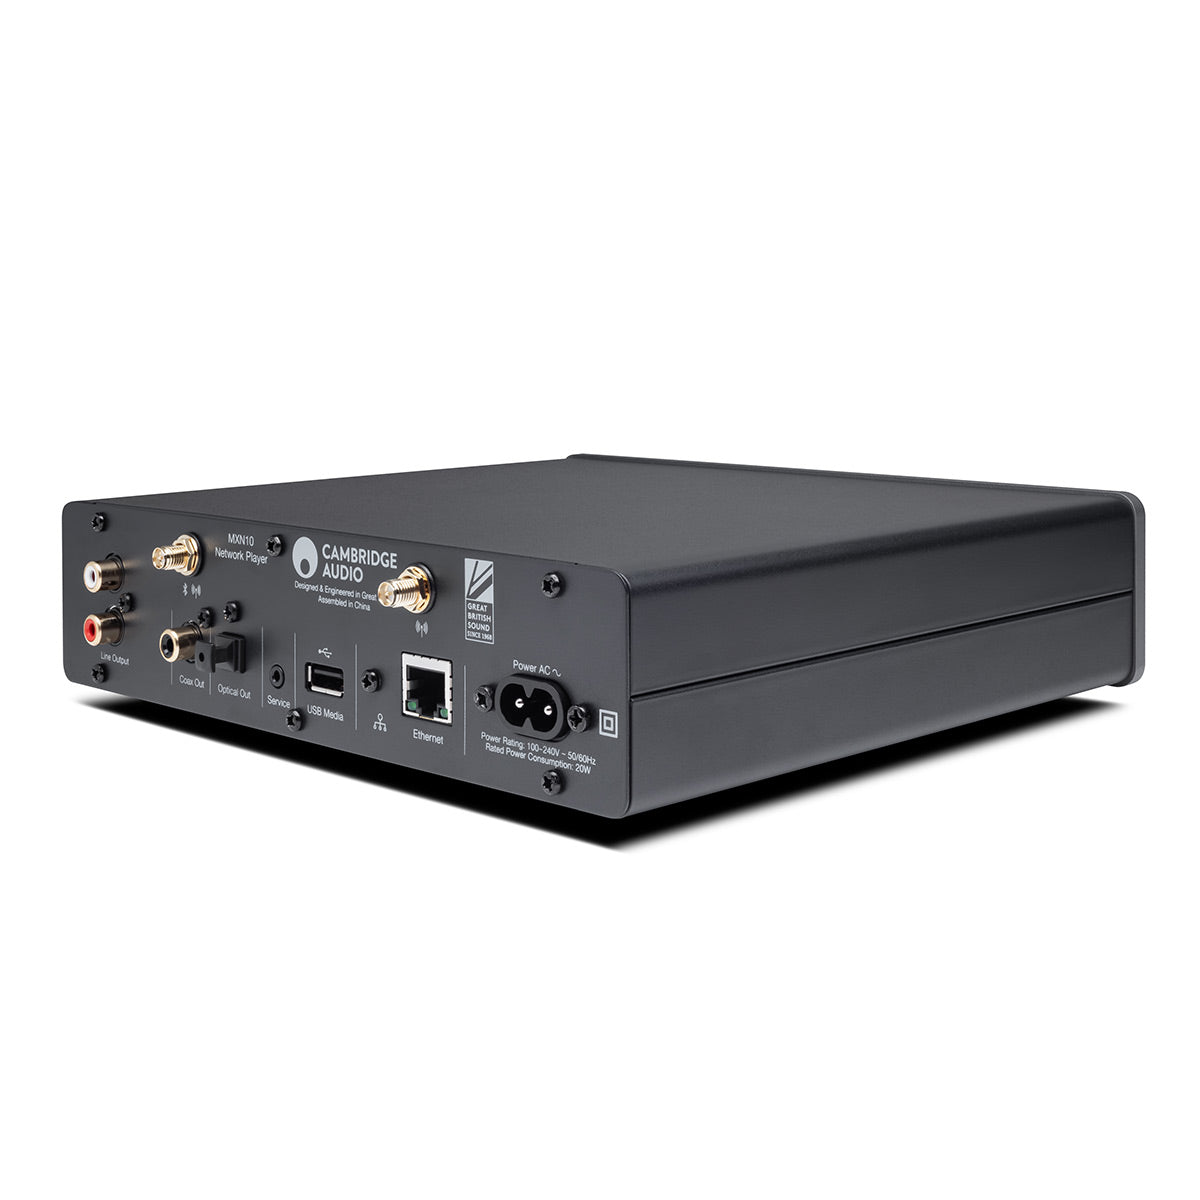 Review: Cambridge Audio MXN10 & AXN10 Network Streamers